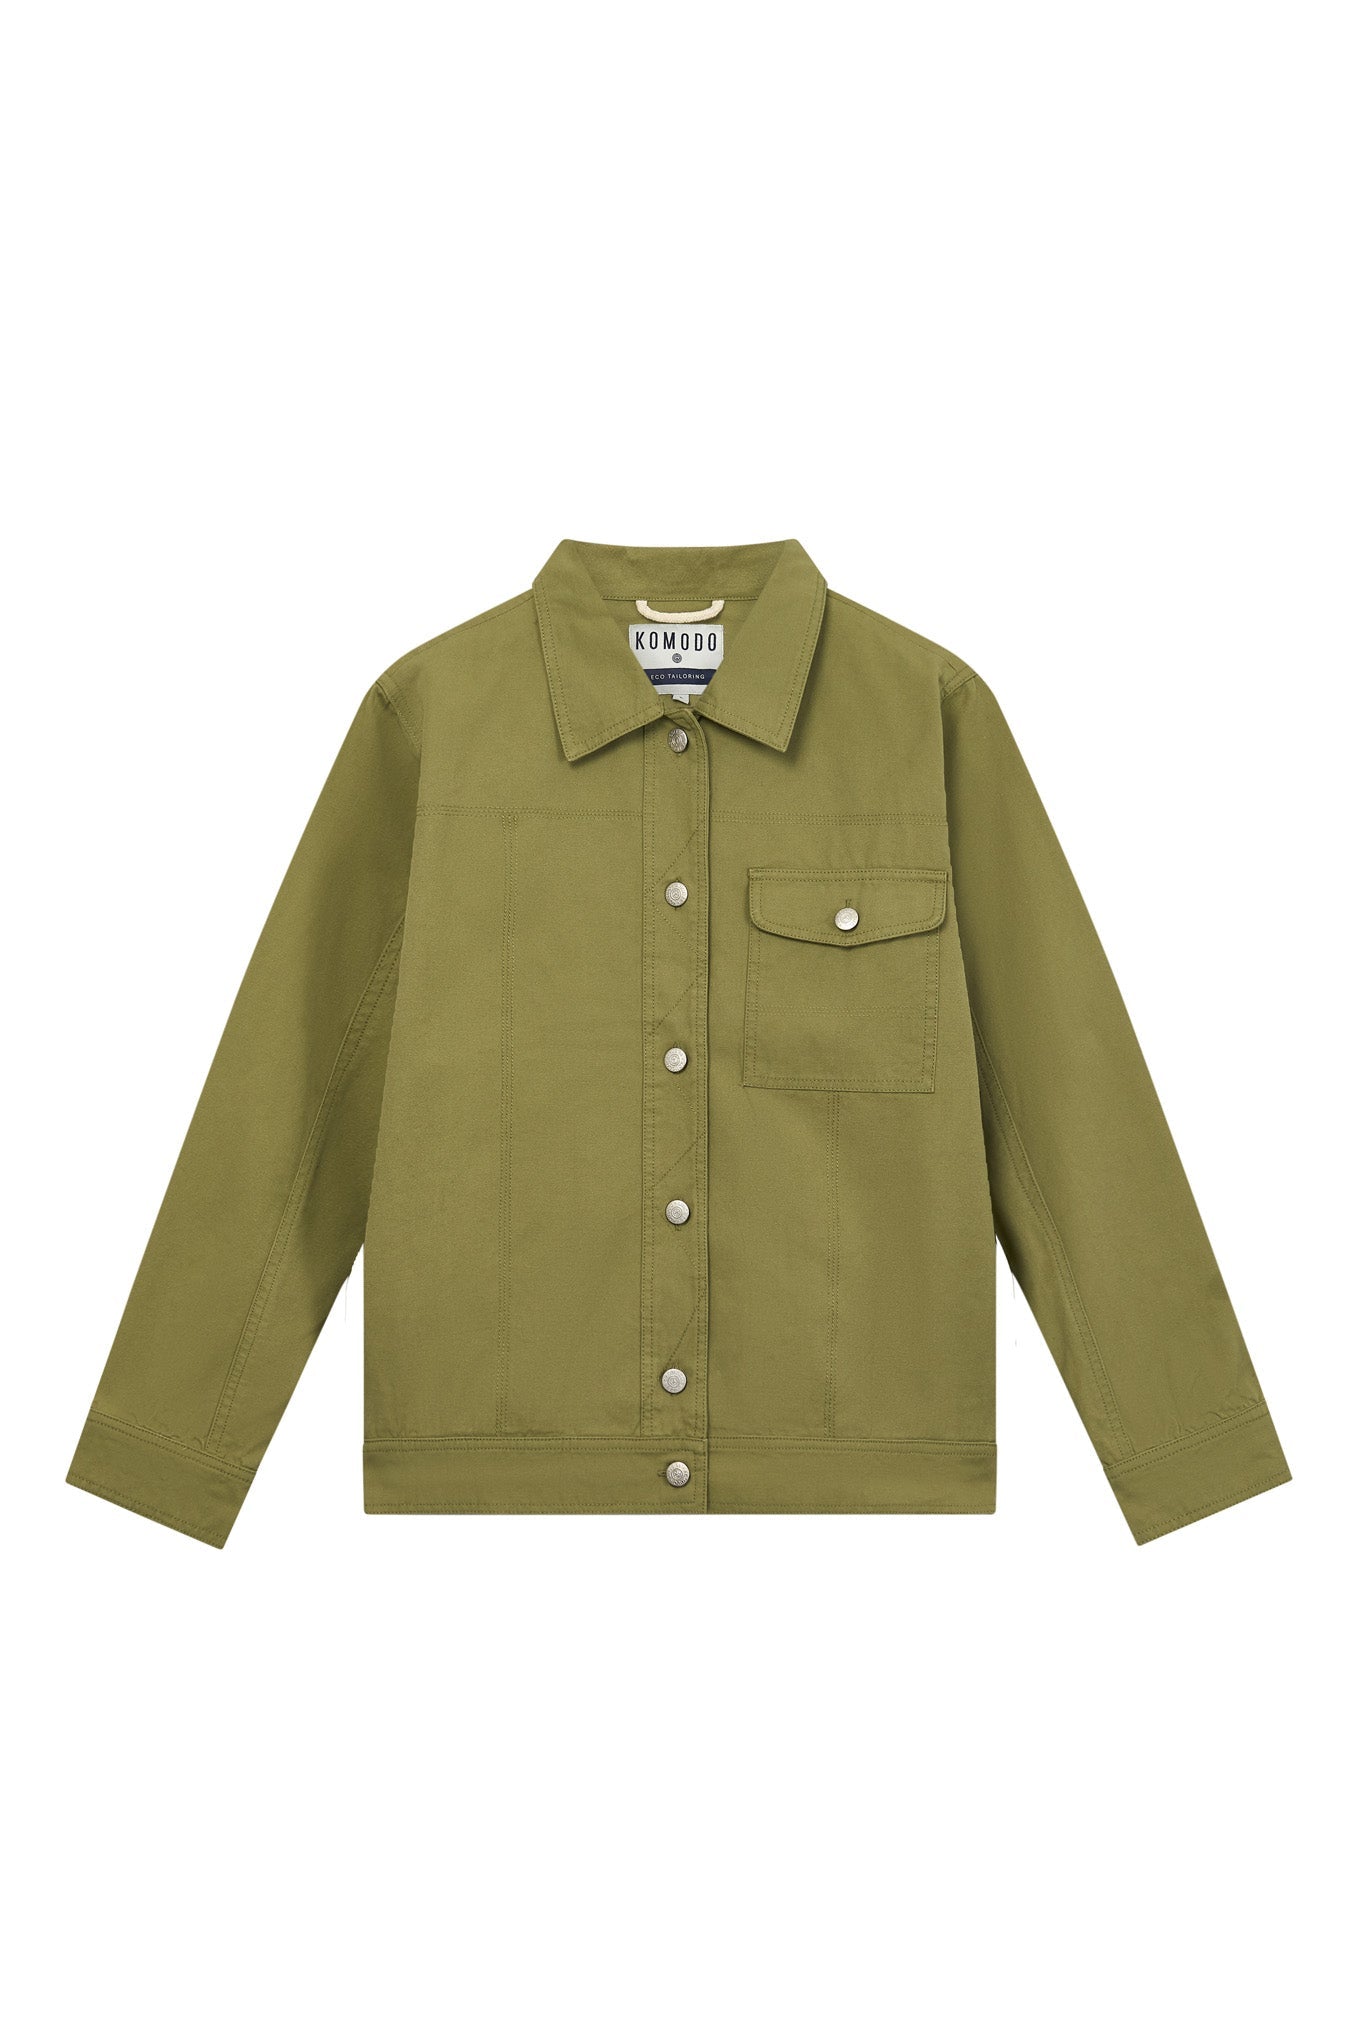 Khaki green men's jacket DUNBAR made of organic cotton by Komodo